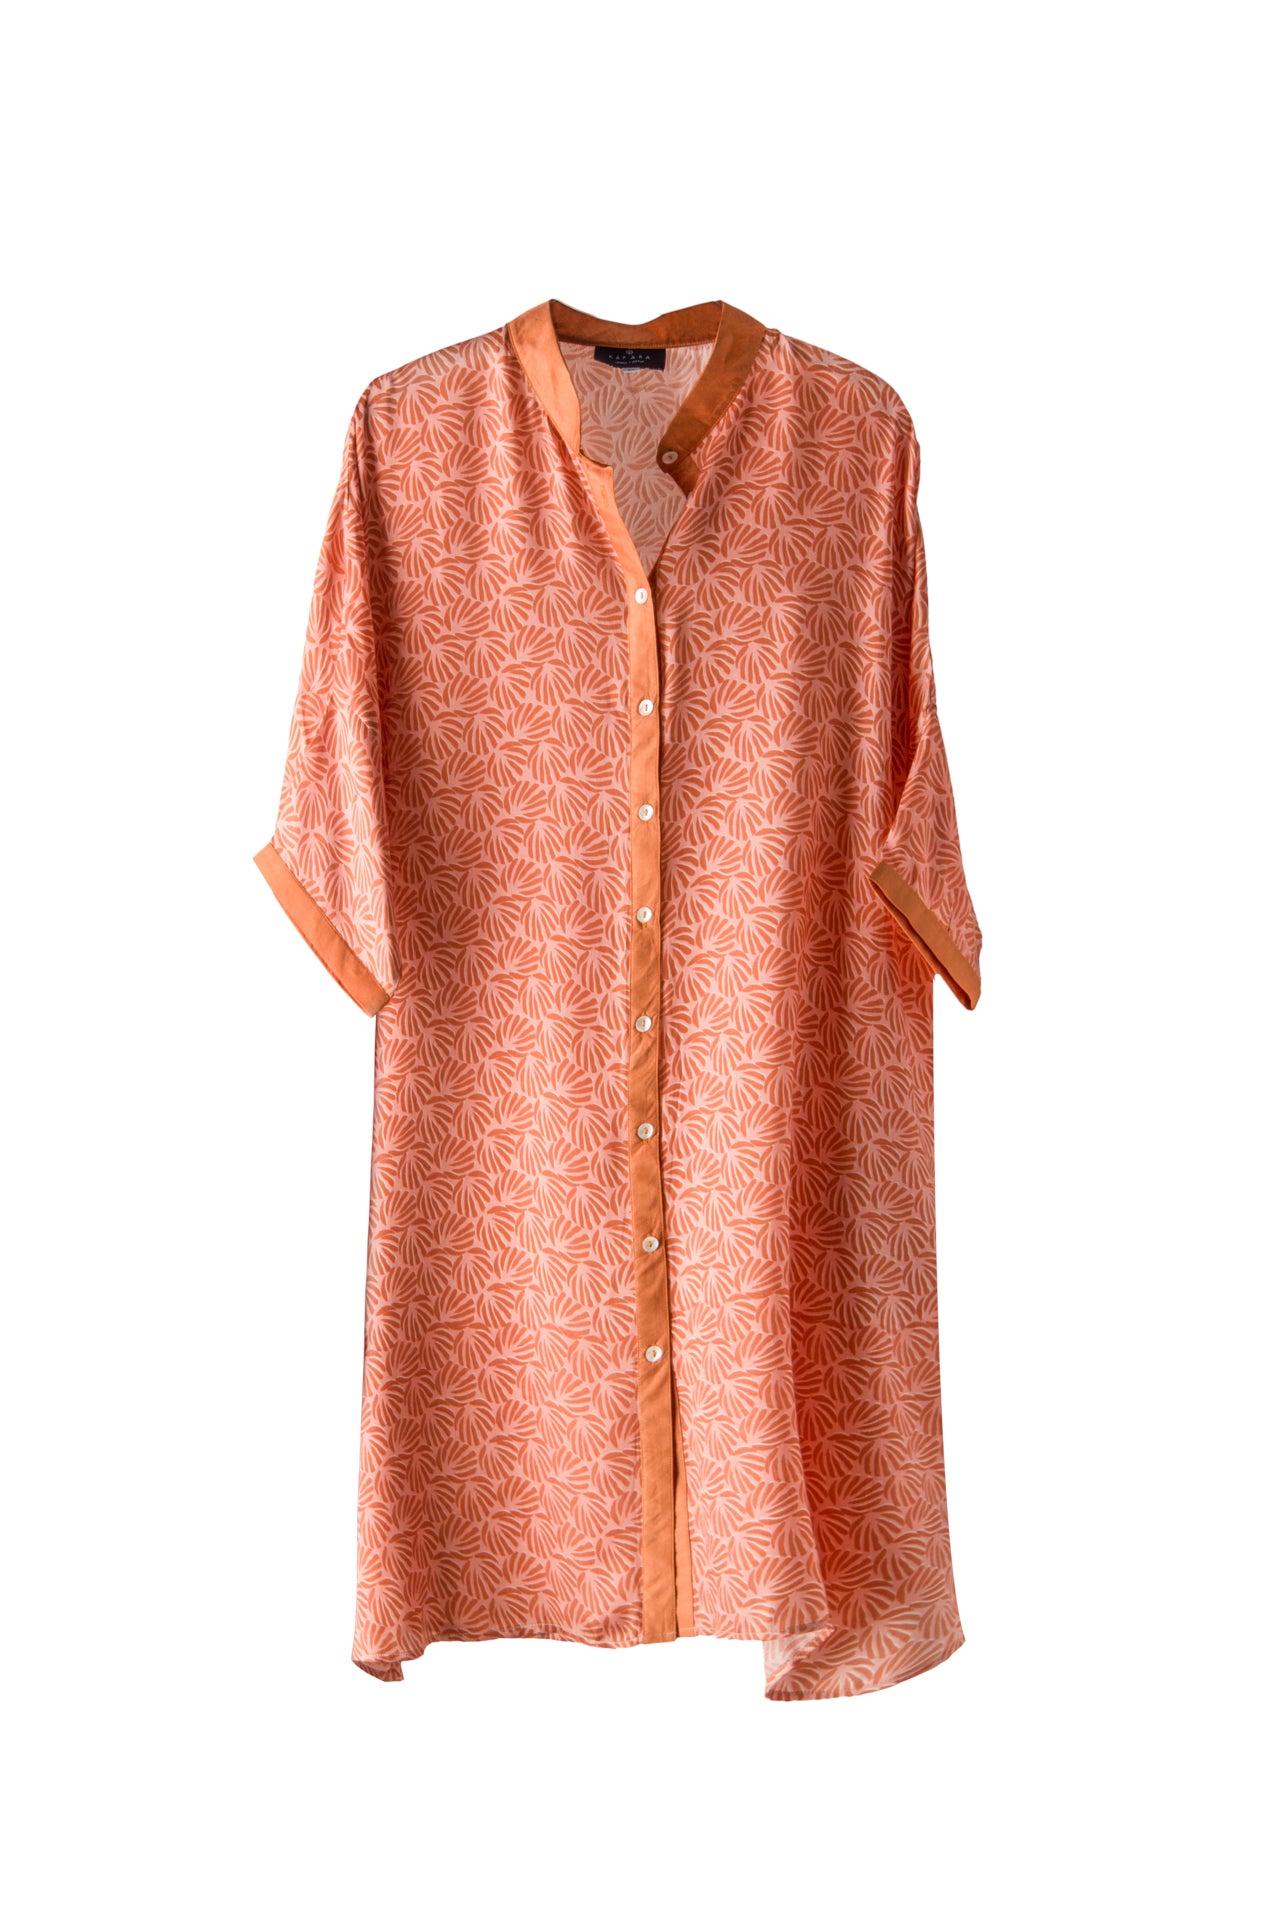 The Veeni Beach Shirt in Orange